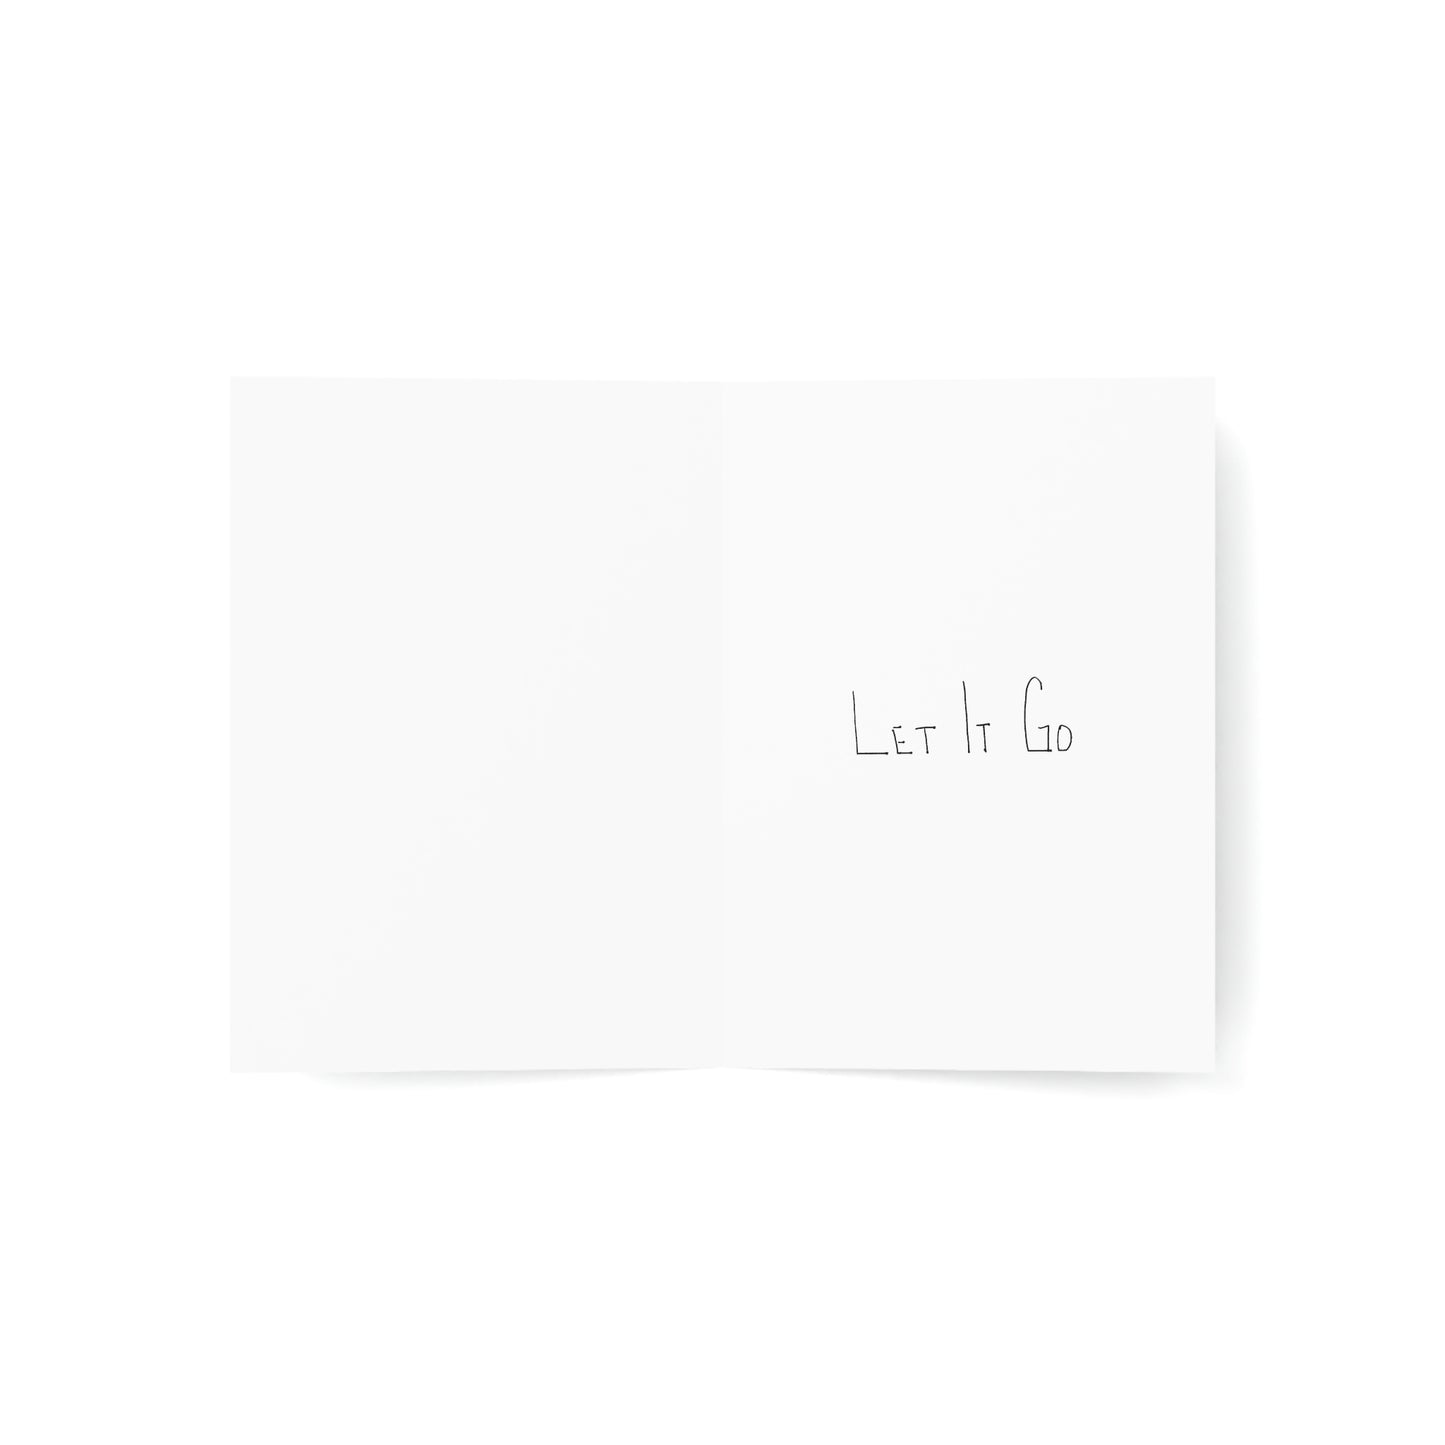 Encouragement/Support - Let it Go